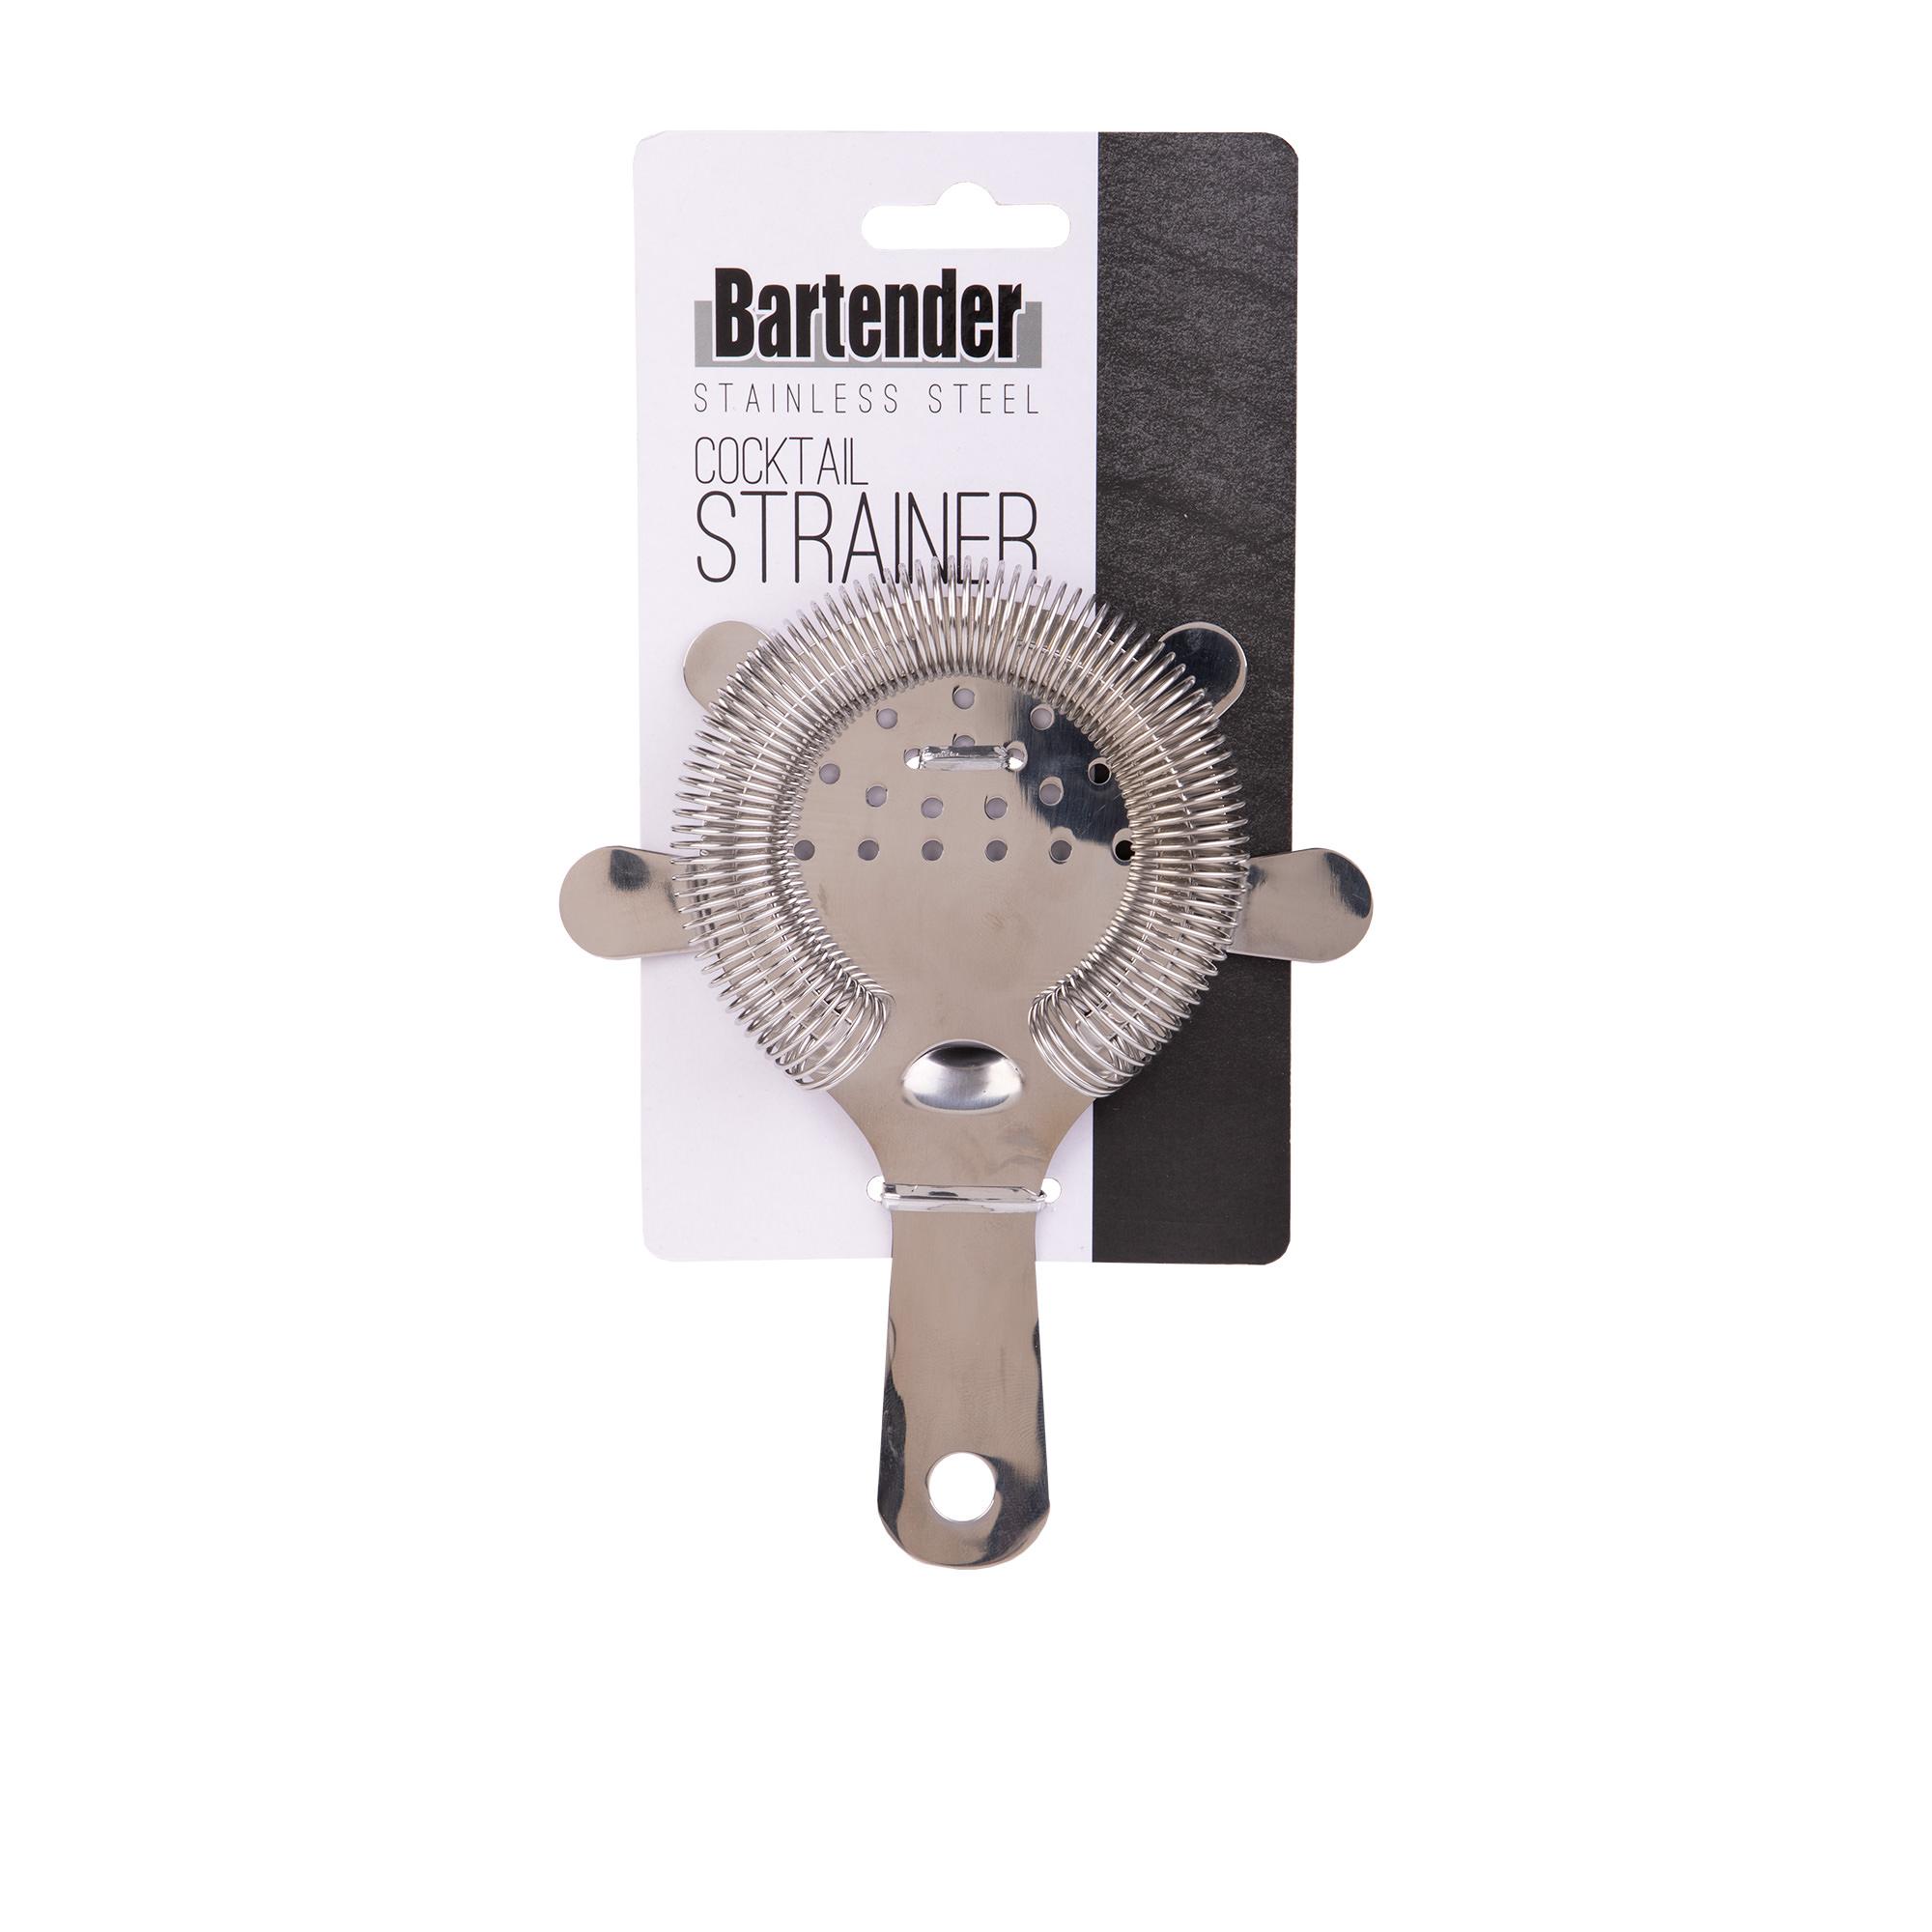 Bartender Stainless Steel Cocktail Strainer Image 2